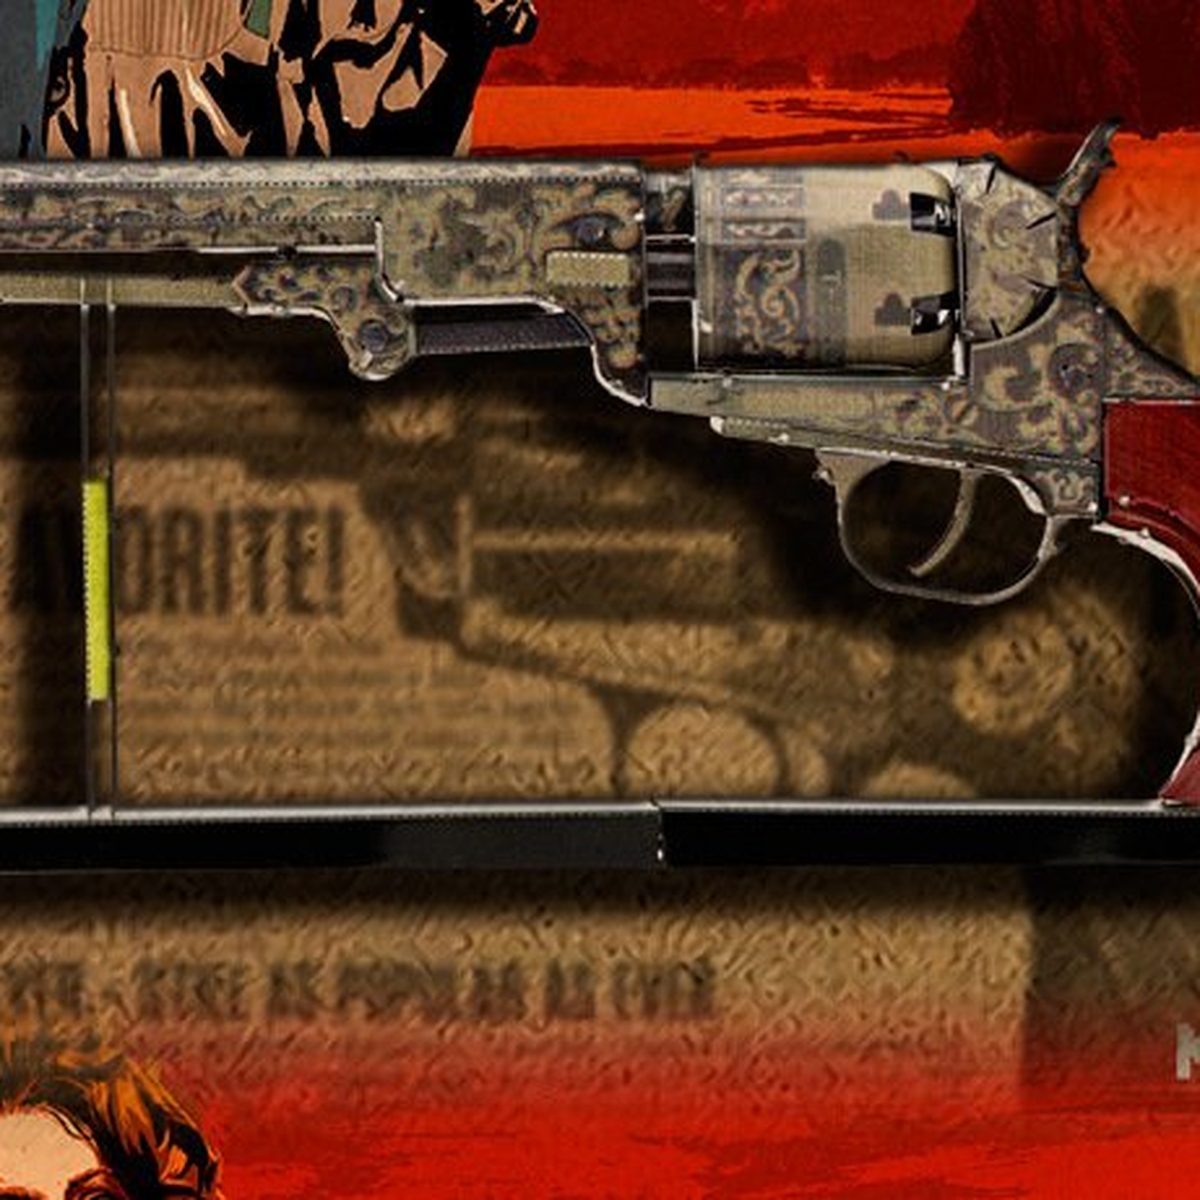 Placa Criativa Decorativa Personalizada Red Dead Redemption